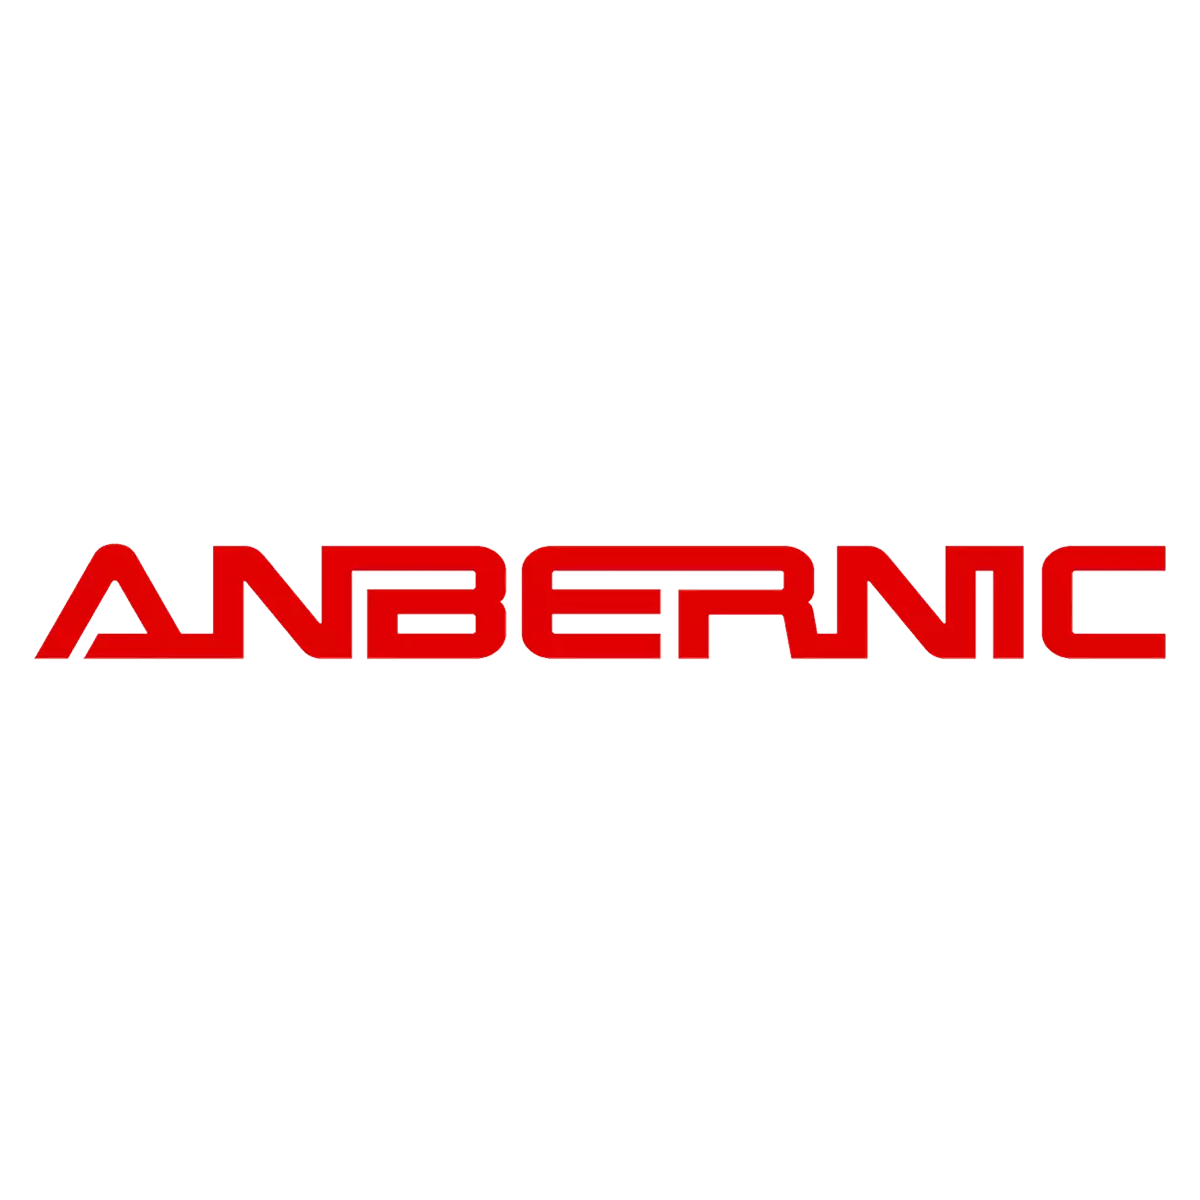 Anbernic